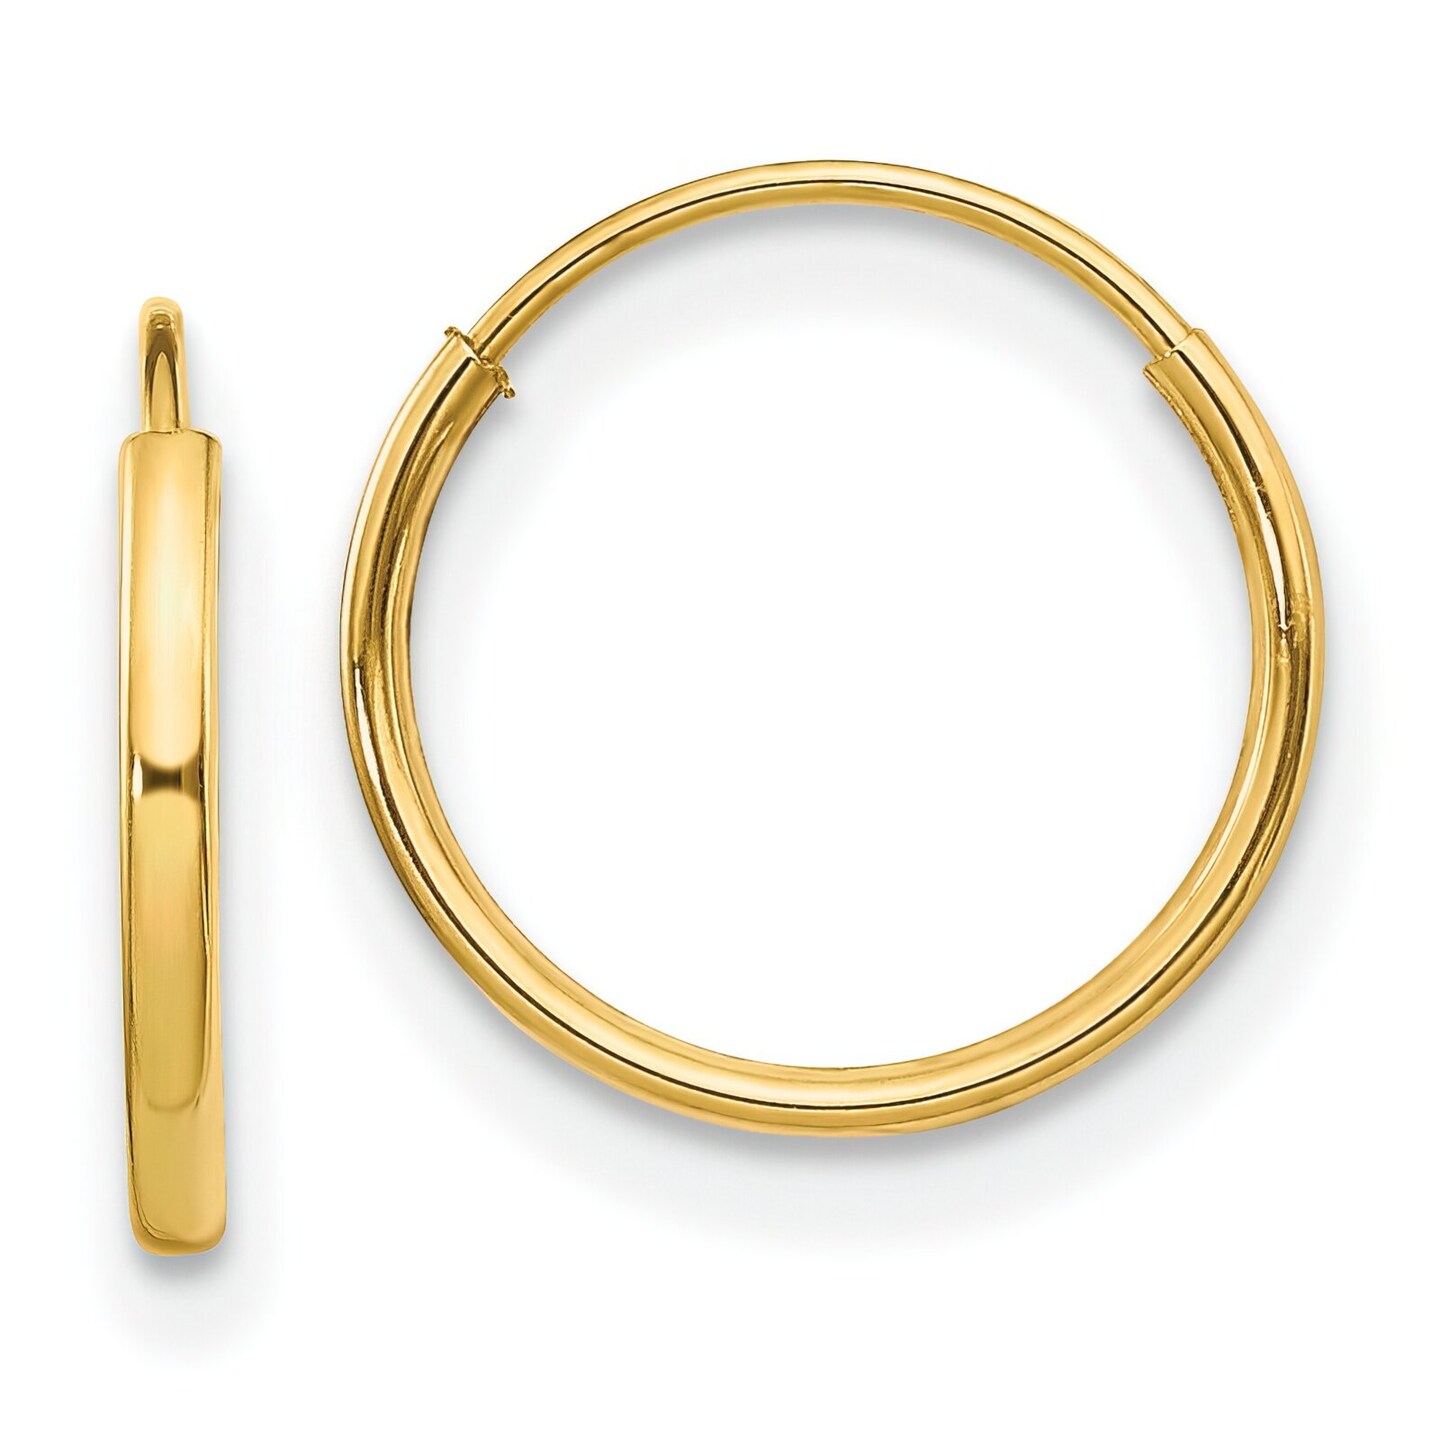 14K Yellow Gold Endless Hoop Earrings Jewelry 12mm x 12mm